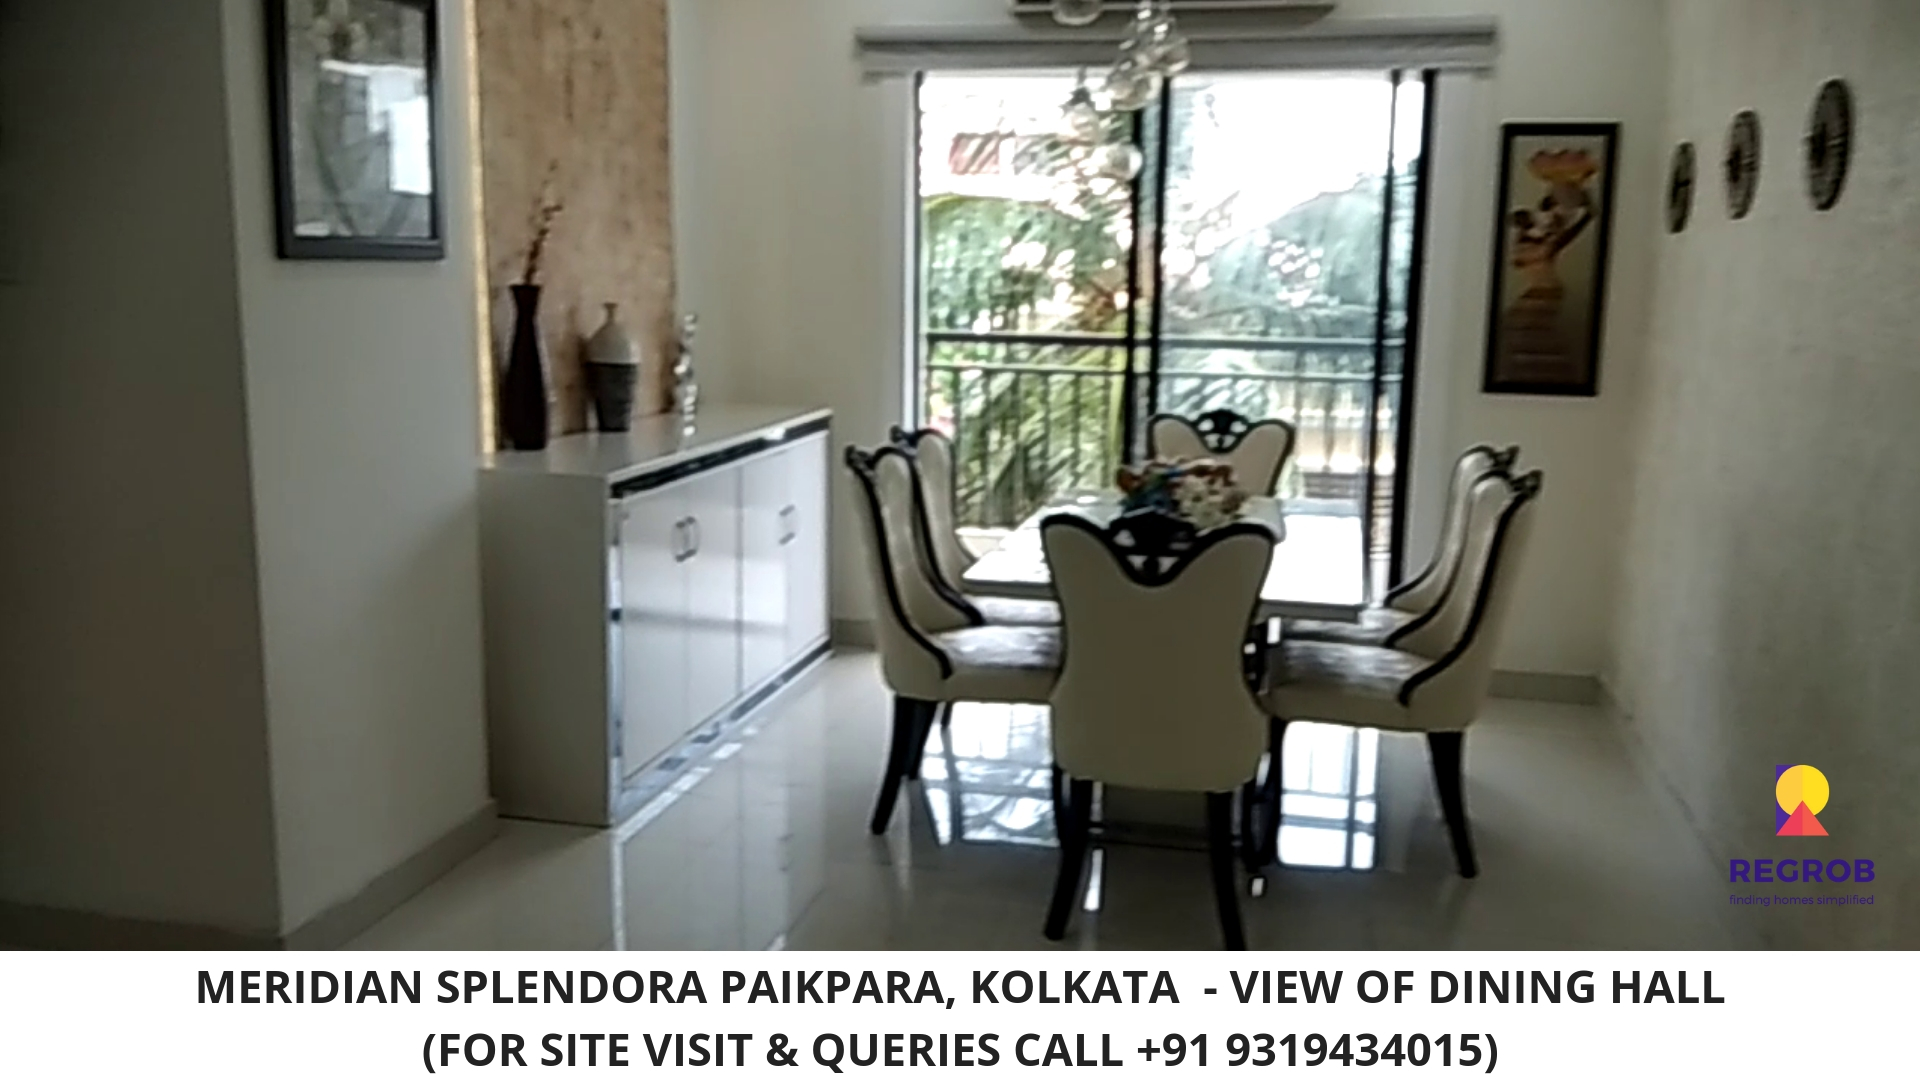 Meridian Splendora Paikpara Kolkata